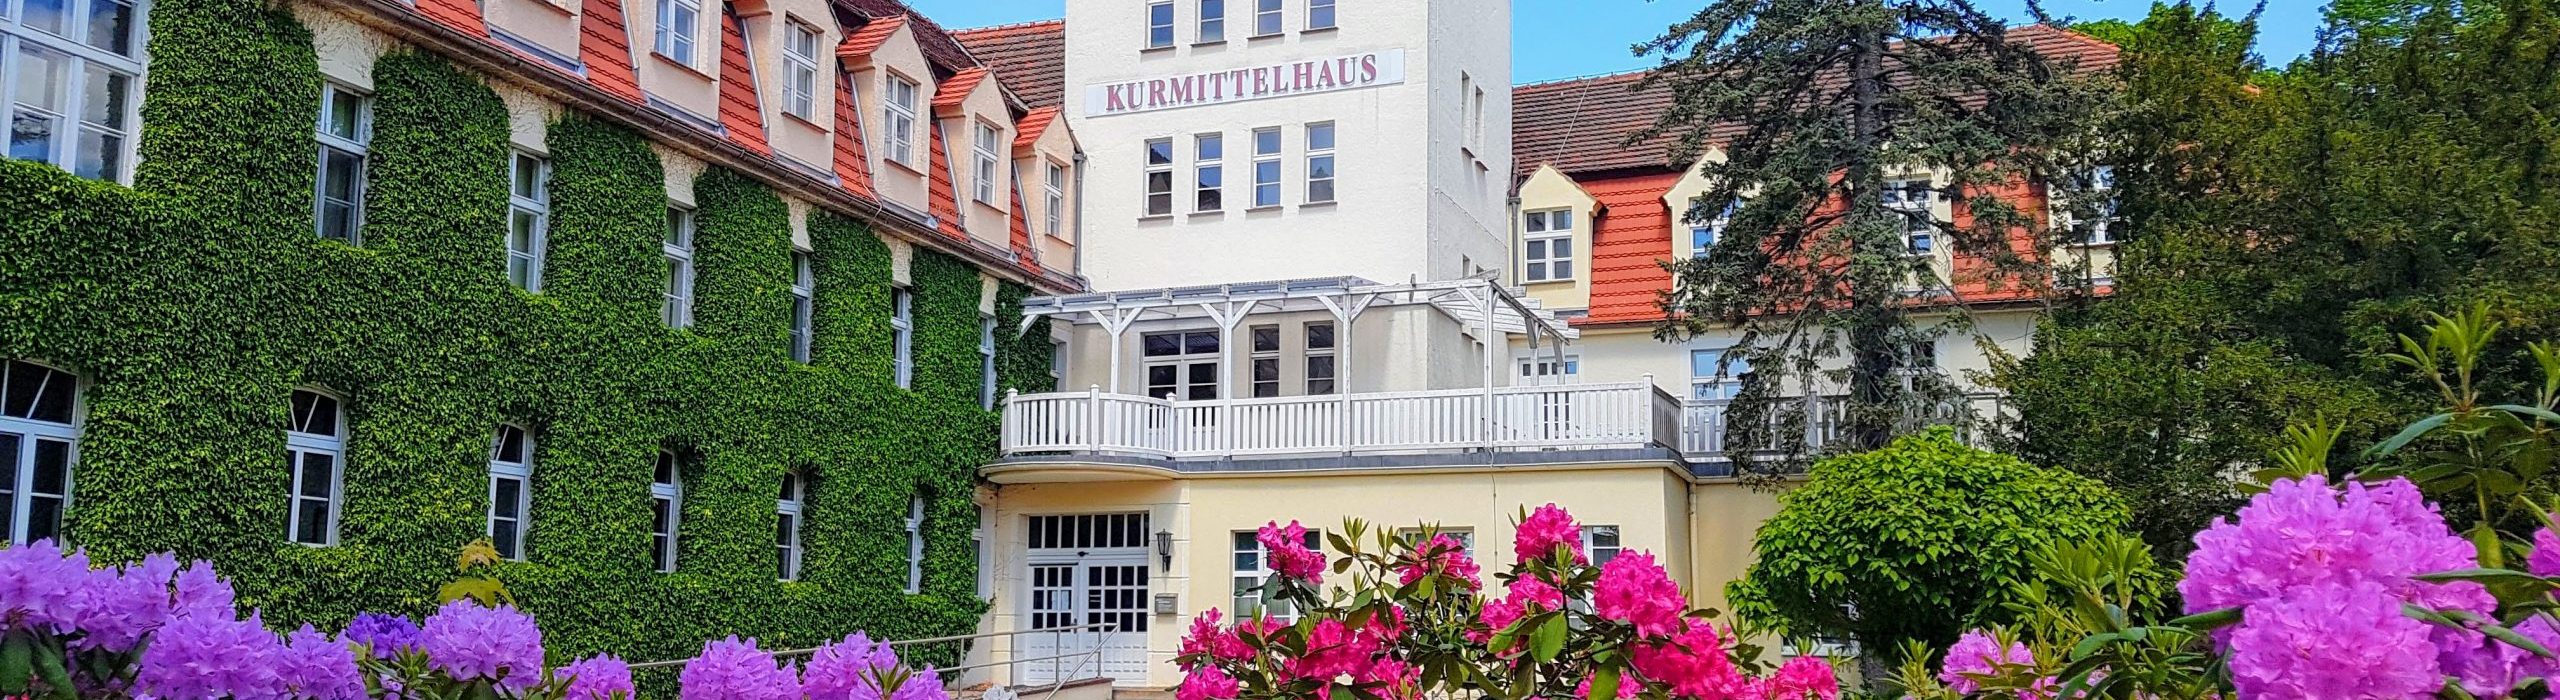 Kurmittelhaus Bad Wilsnack / Brandenburg